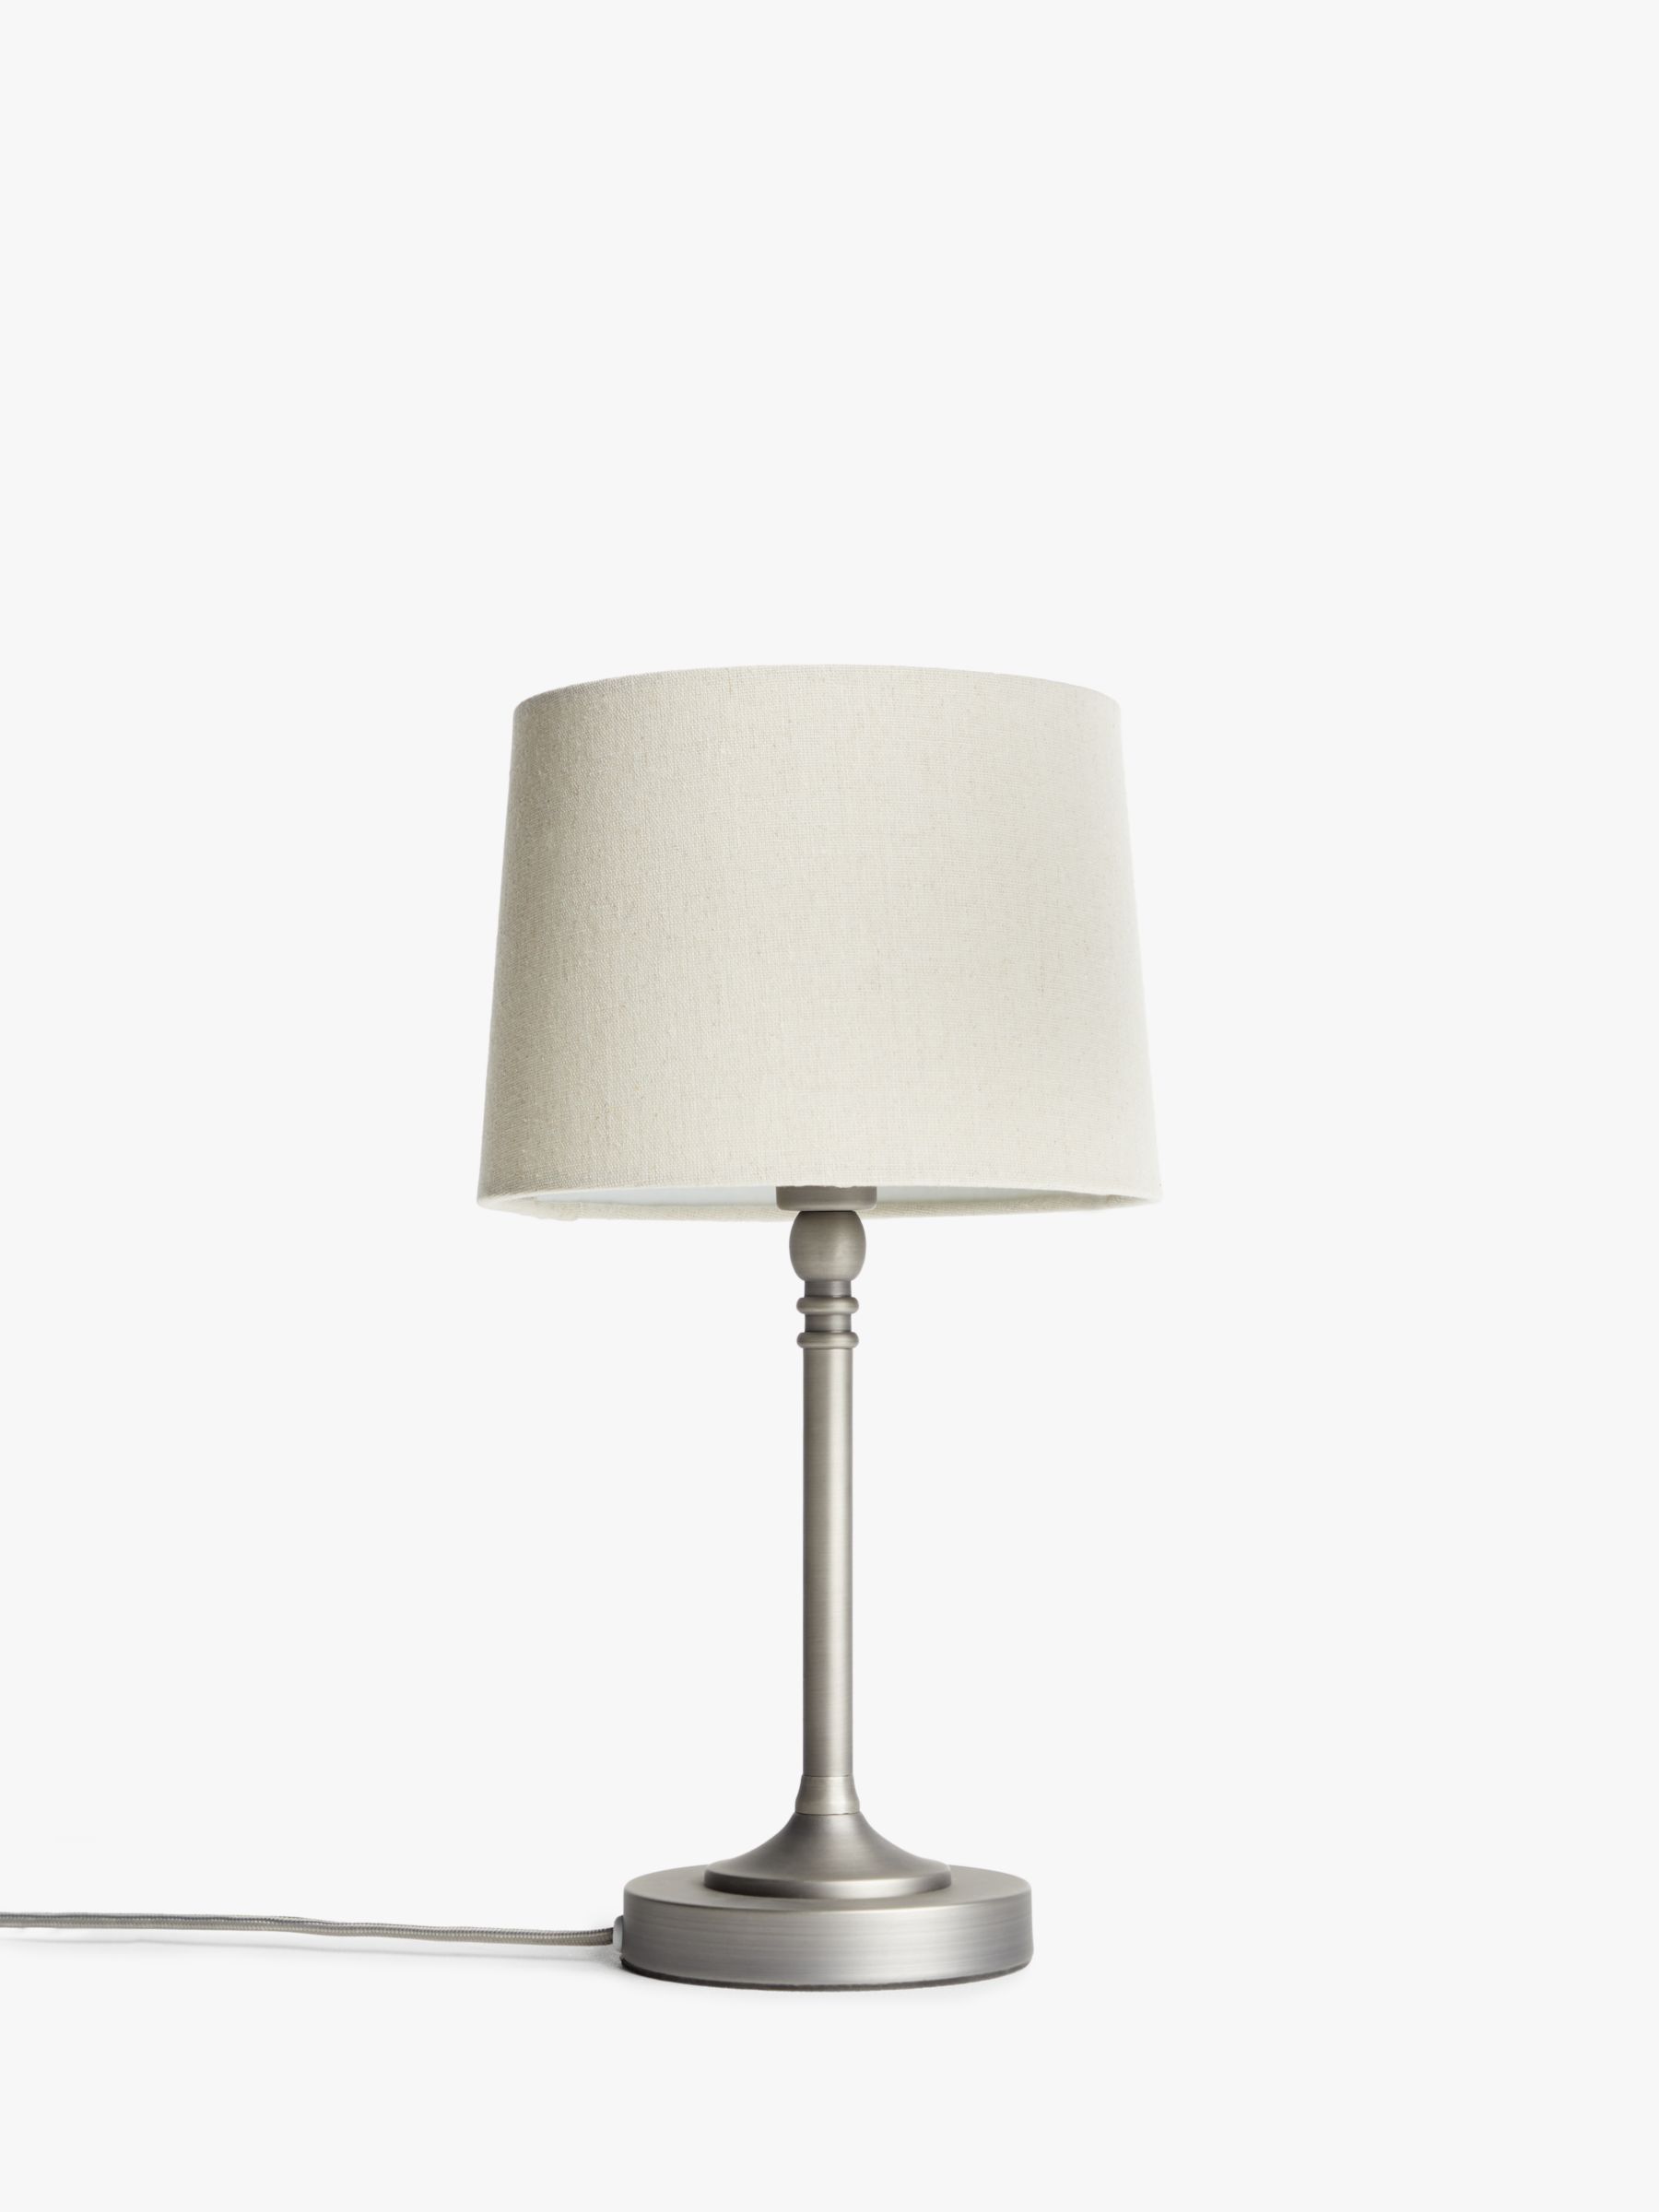 buy bedside lamp